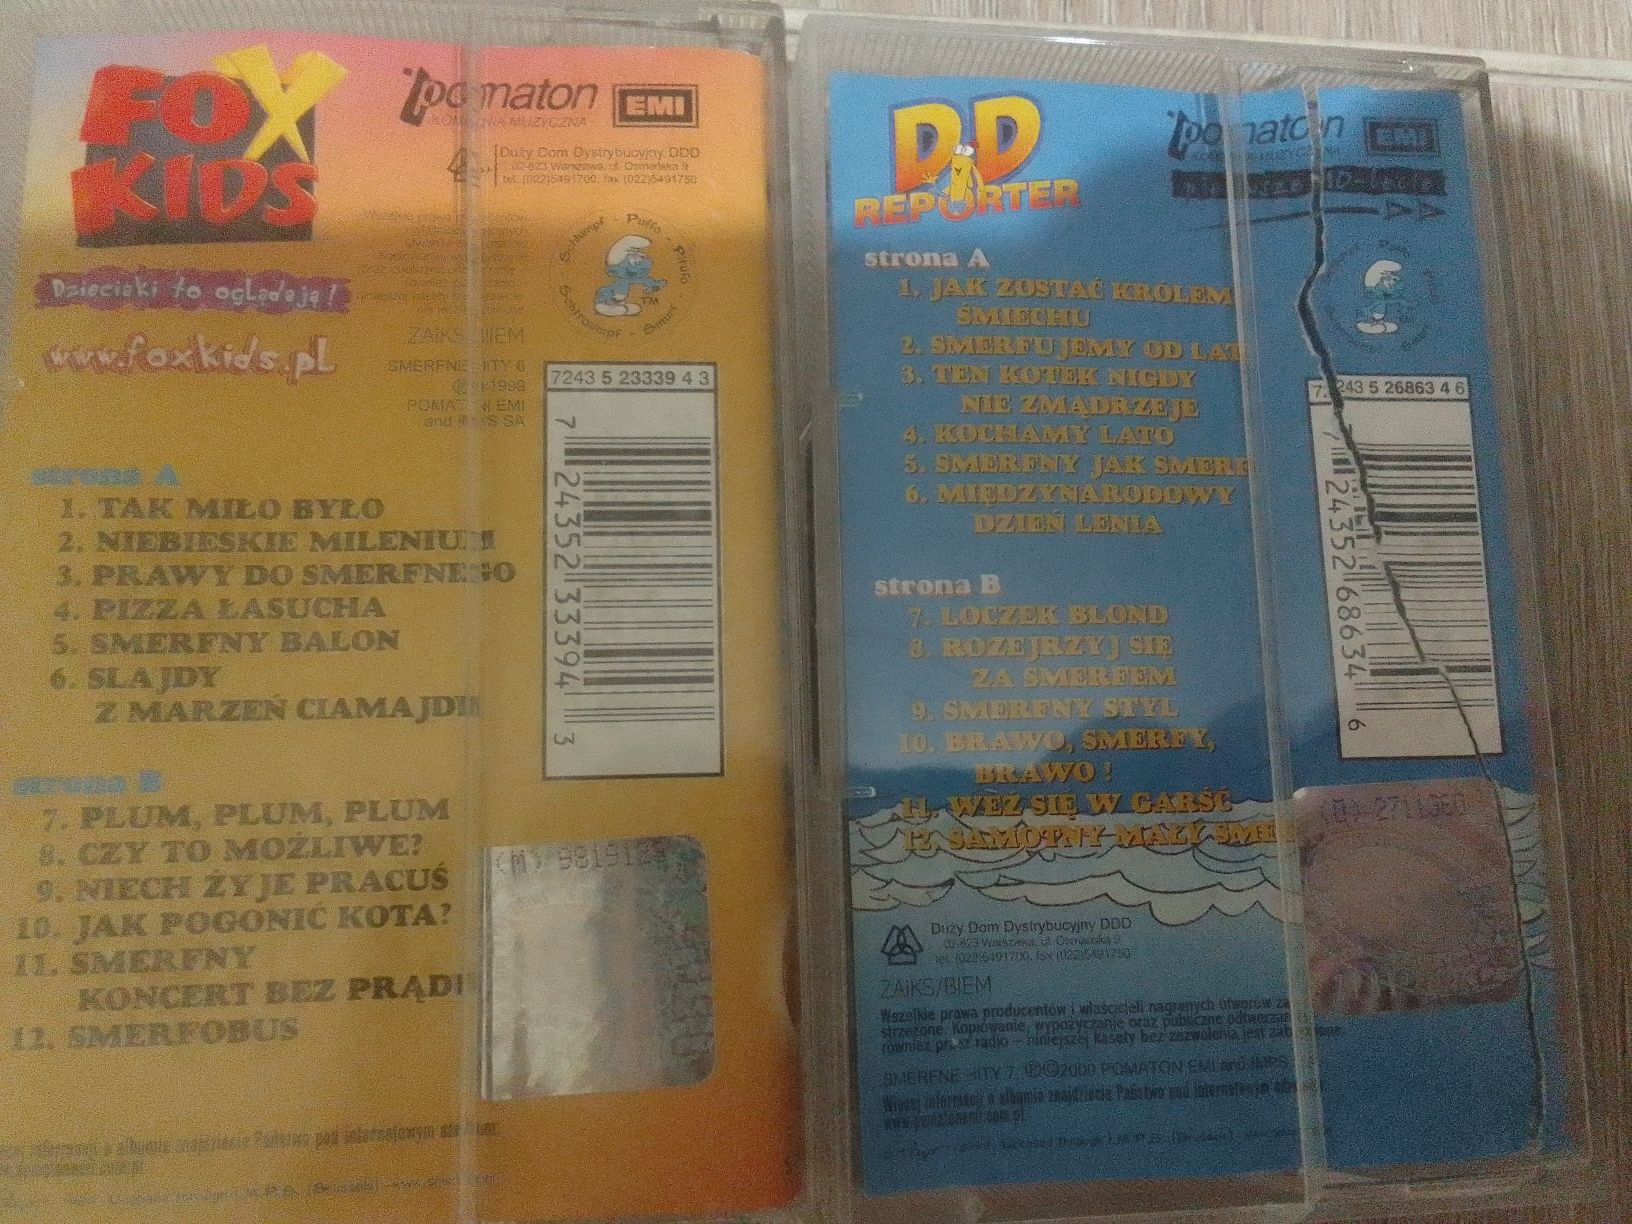 Smerfne Hity 13 kaset magnetofonowych+2 płyty CD